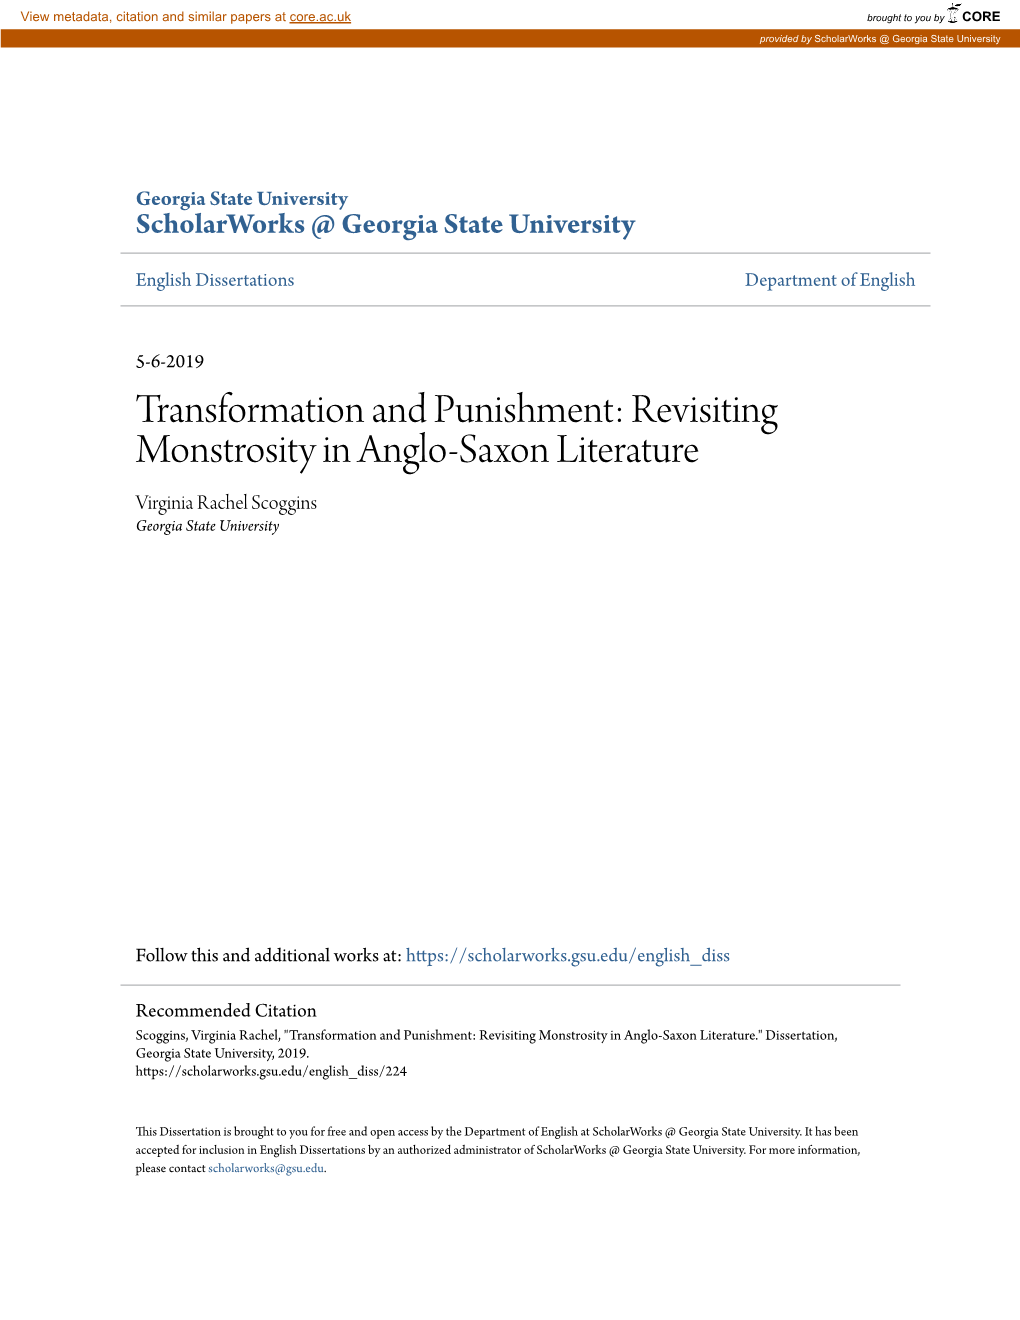 Revisiting Monstrosity in Anglo-Saxon Literature Virginia Rachel Scoggins Georgia State University